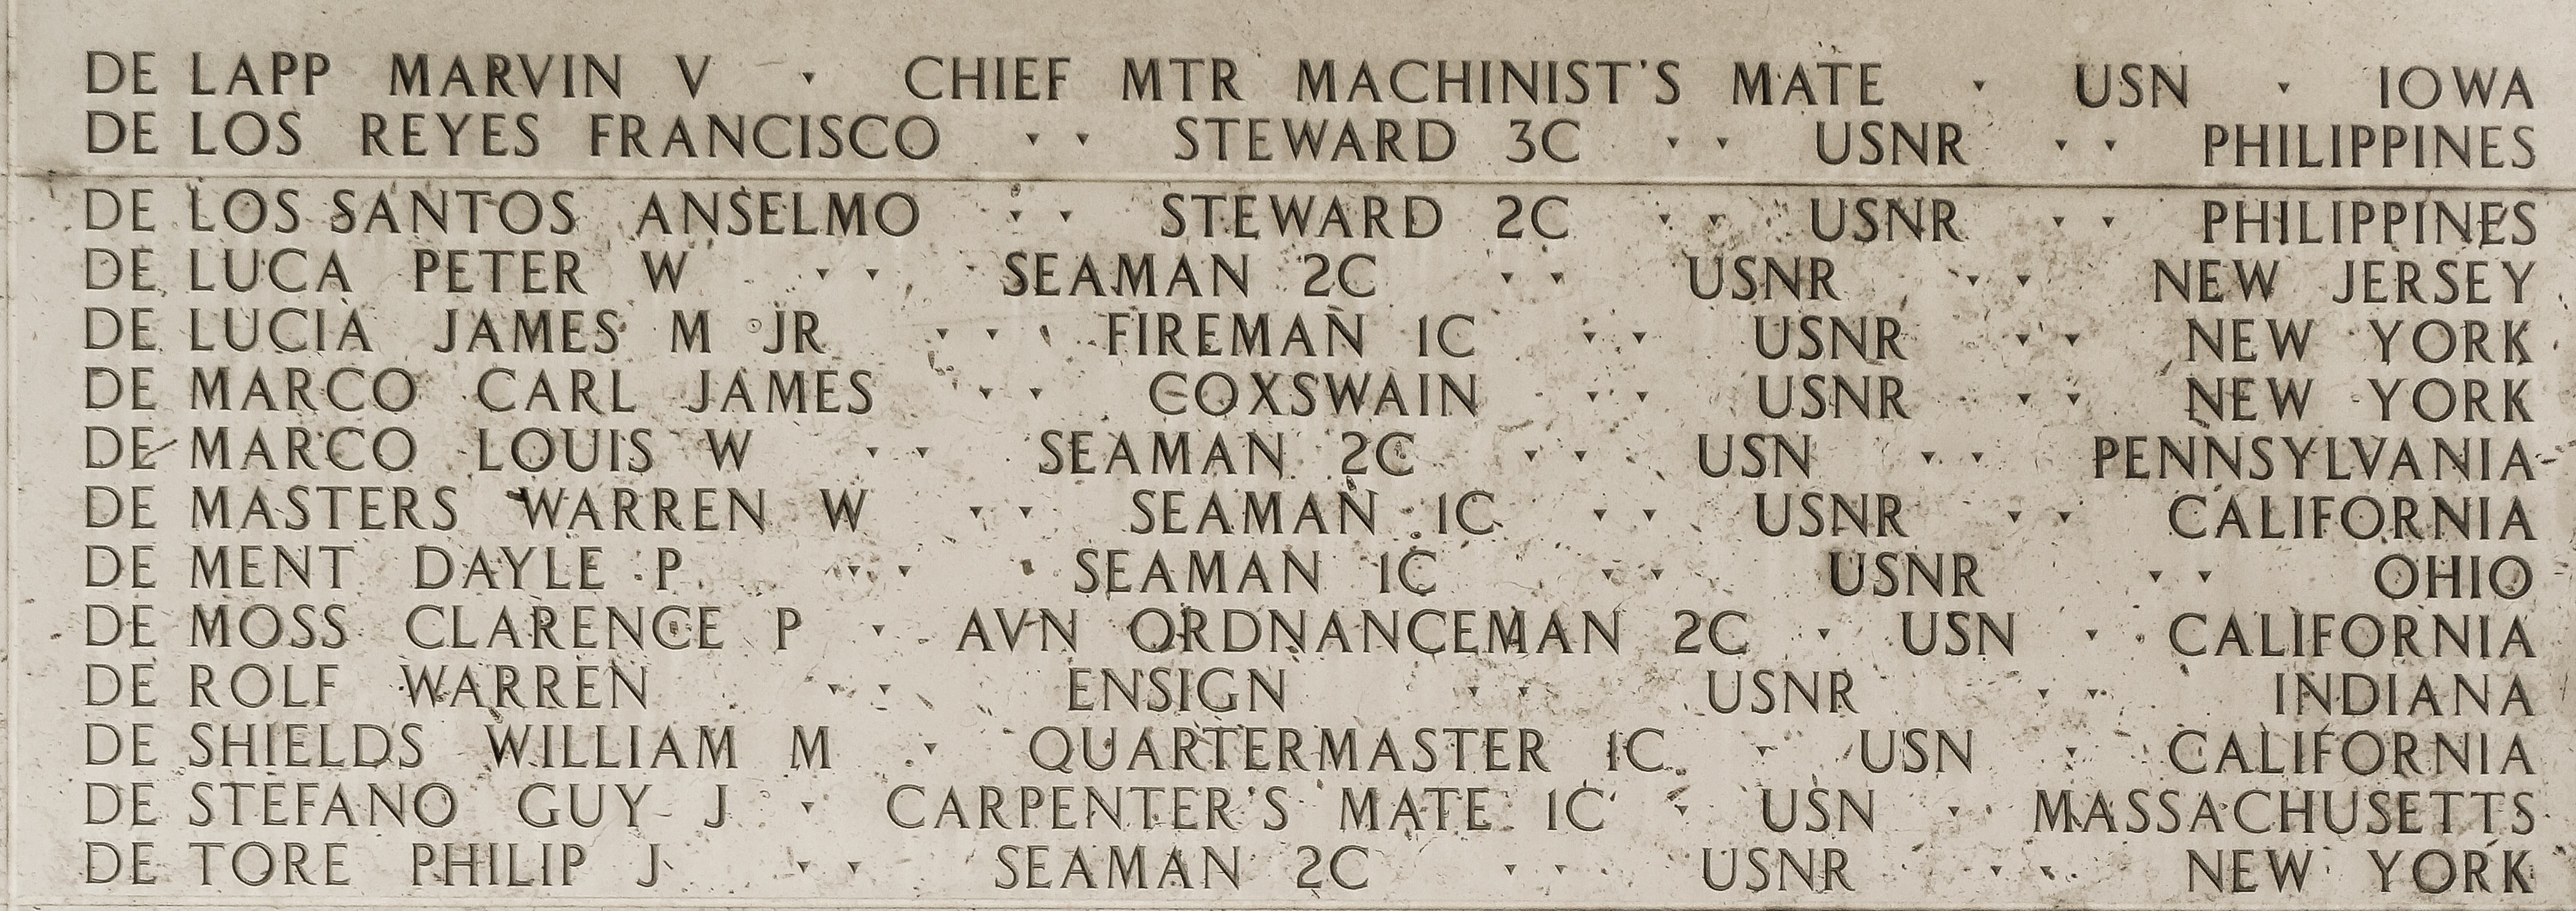 Philip J. De Tore, Seaman Second Class